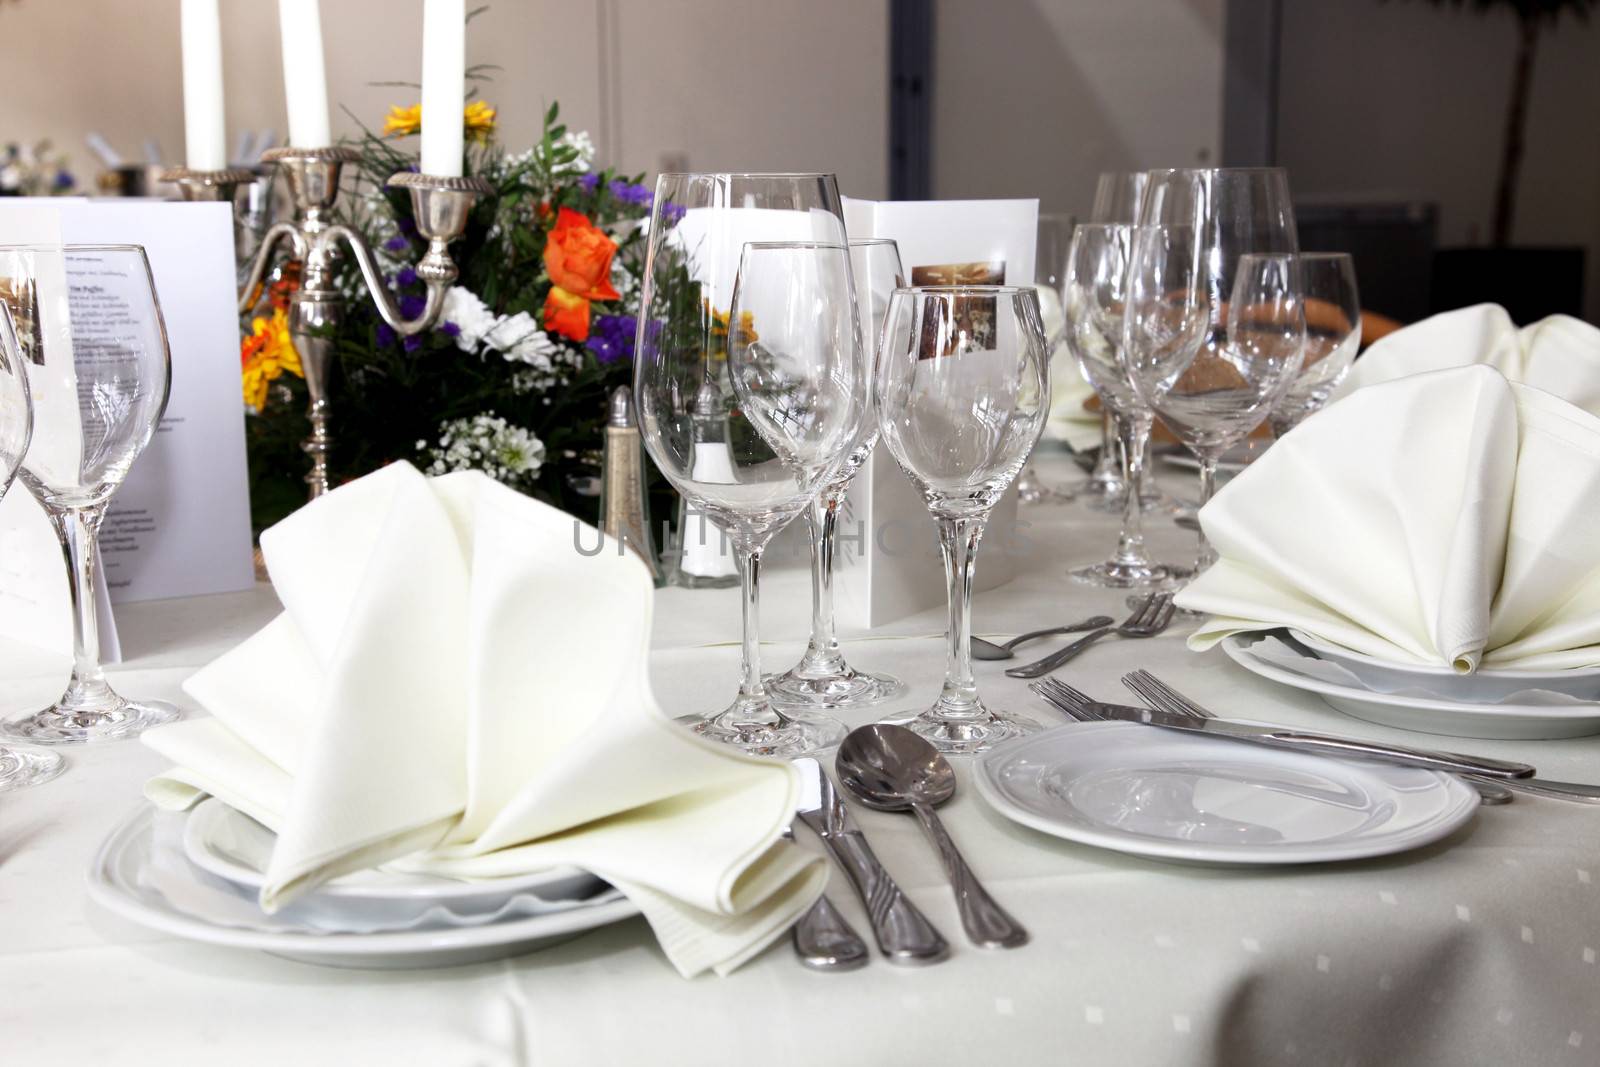 Stylish white table setting by Farina6000